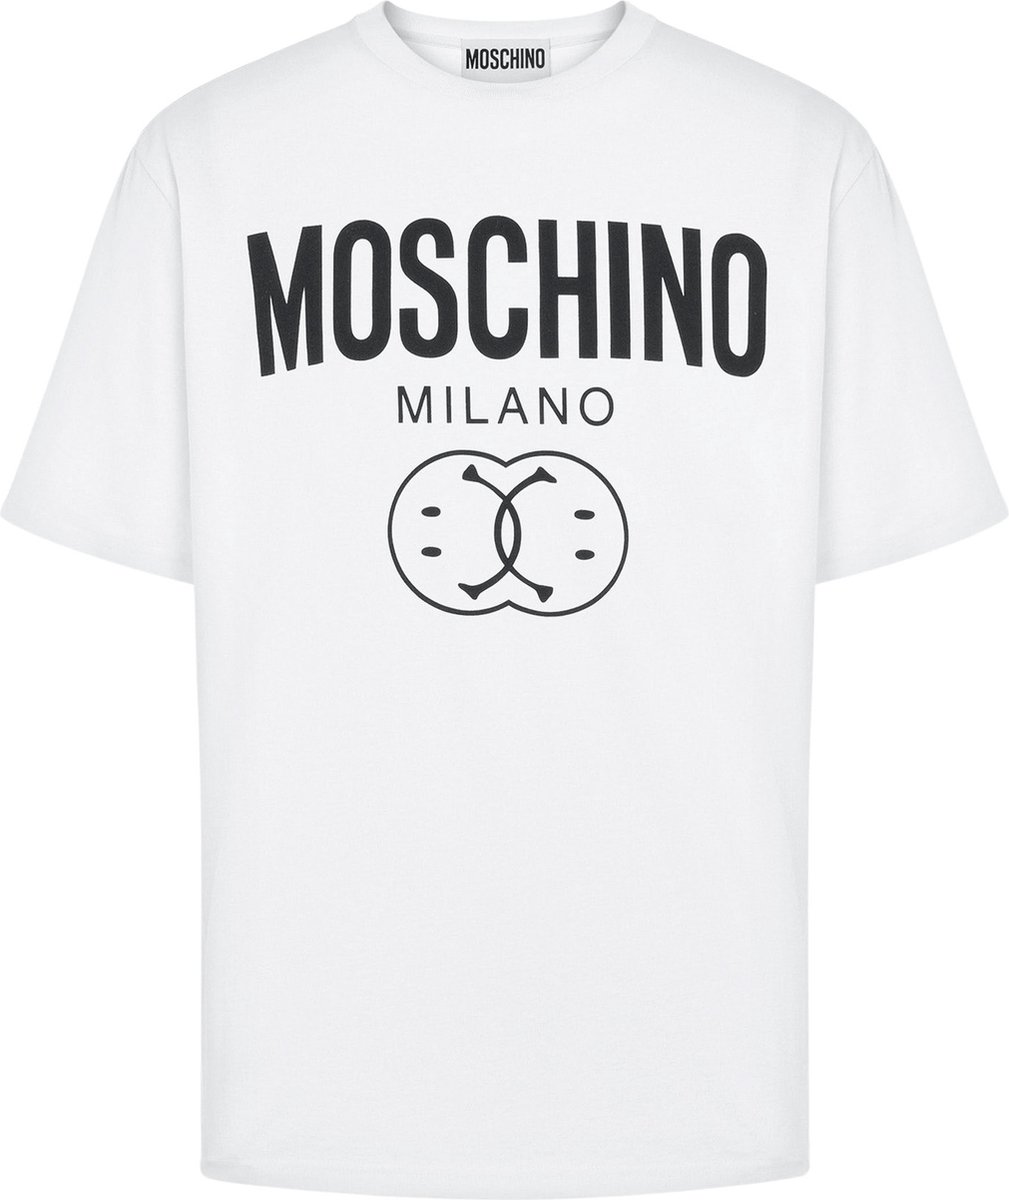 Moschino Heren Double Smiley T-shirt Wit maat M